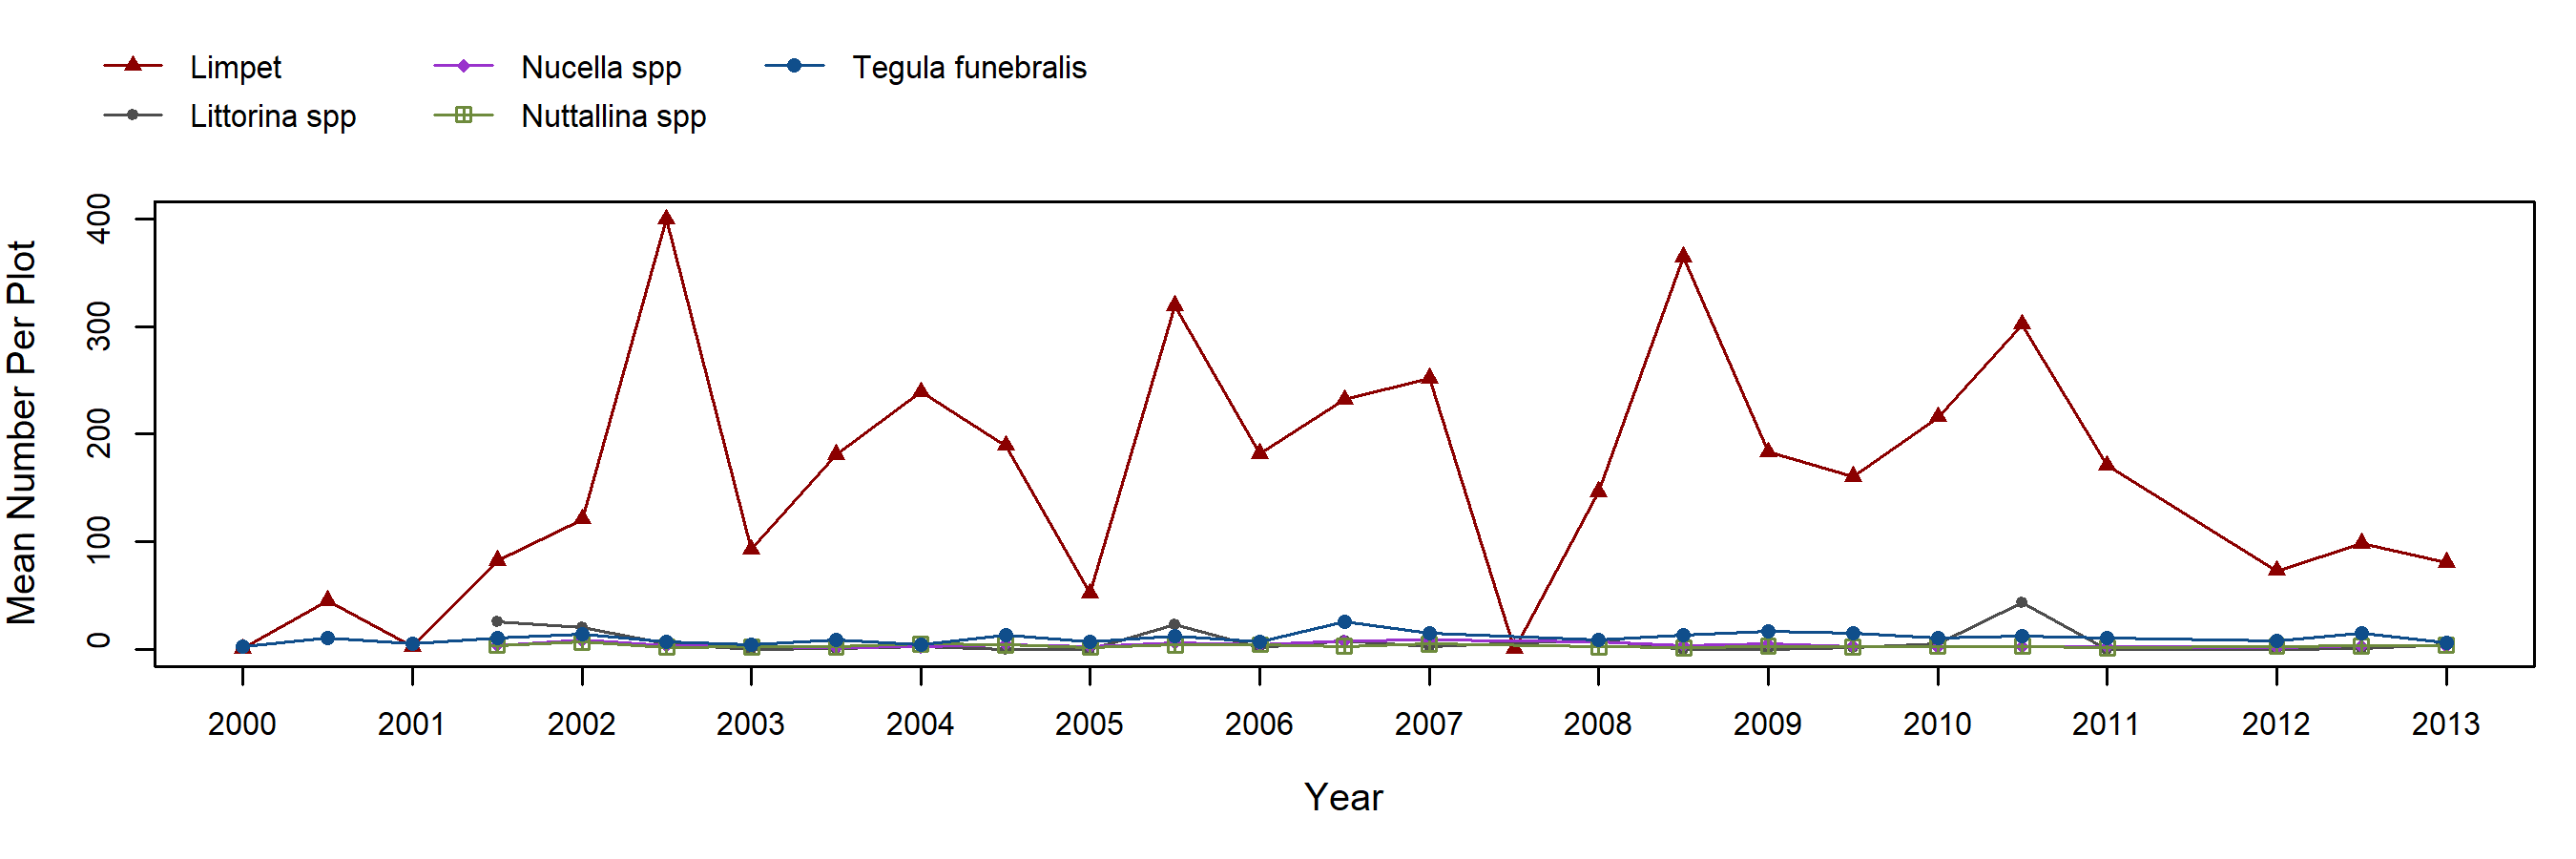 Stairs Mytilus trend plot